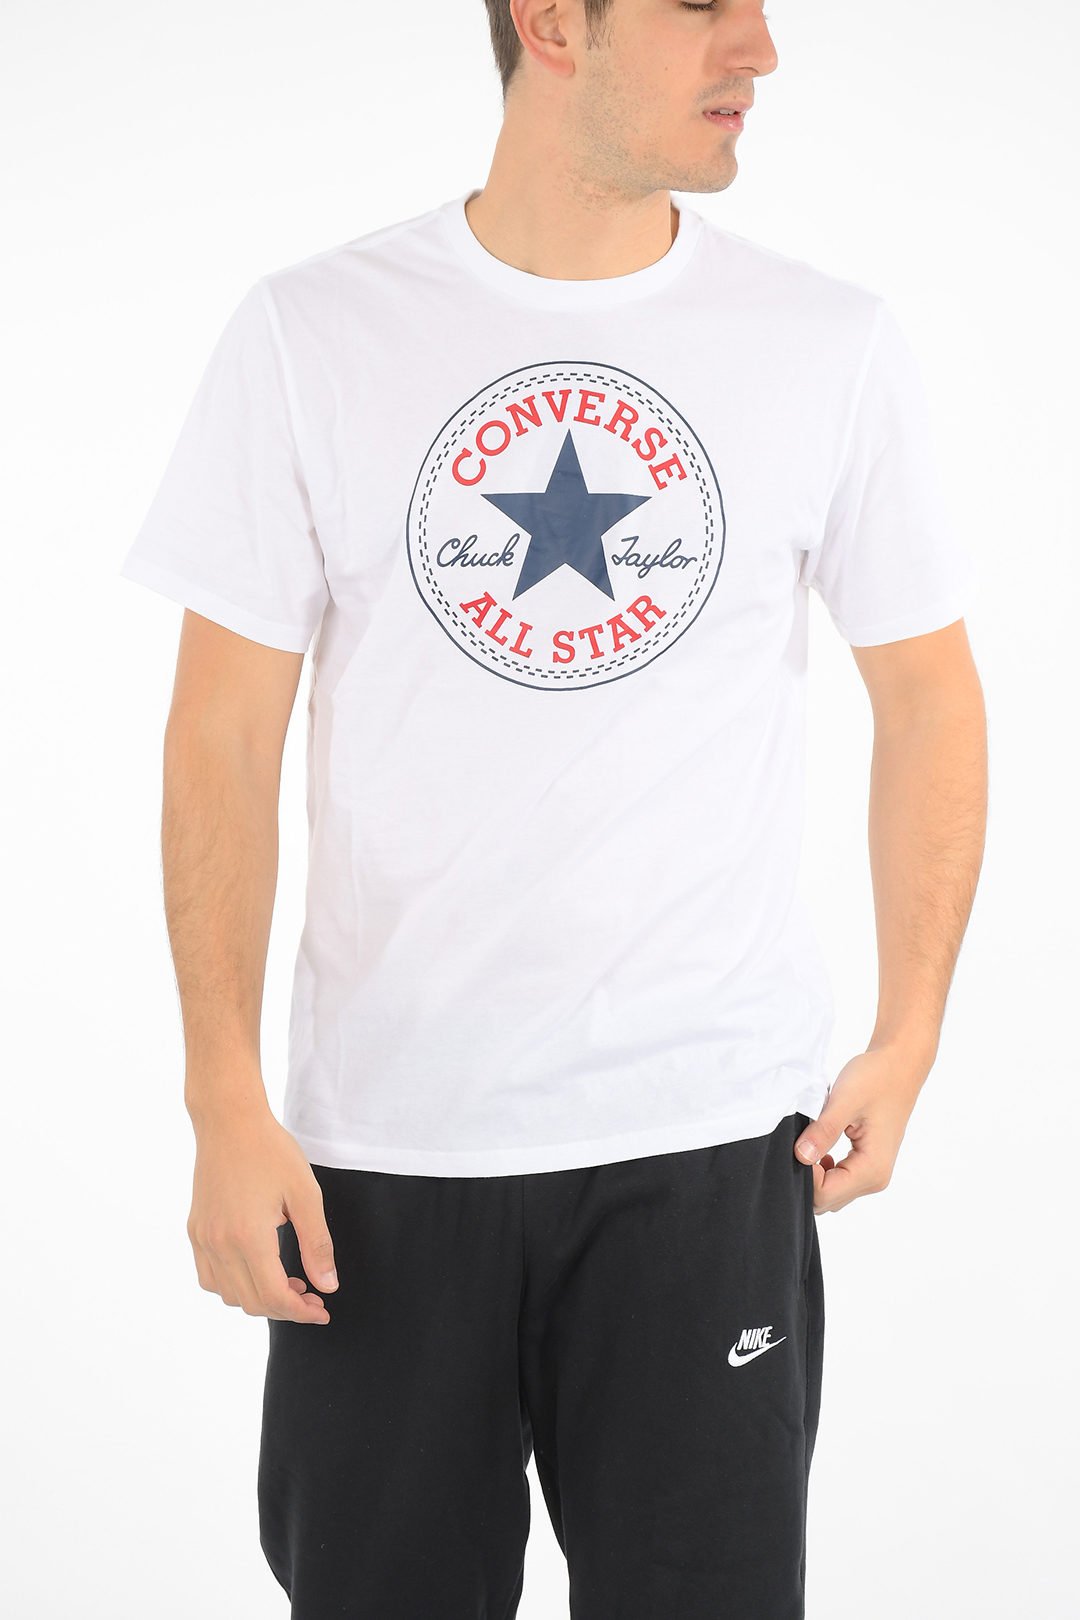 Hoogte verwennen bolvormig Converse ALL STAR Printed T-shirt men - Glamood Outlet